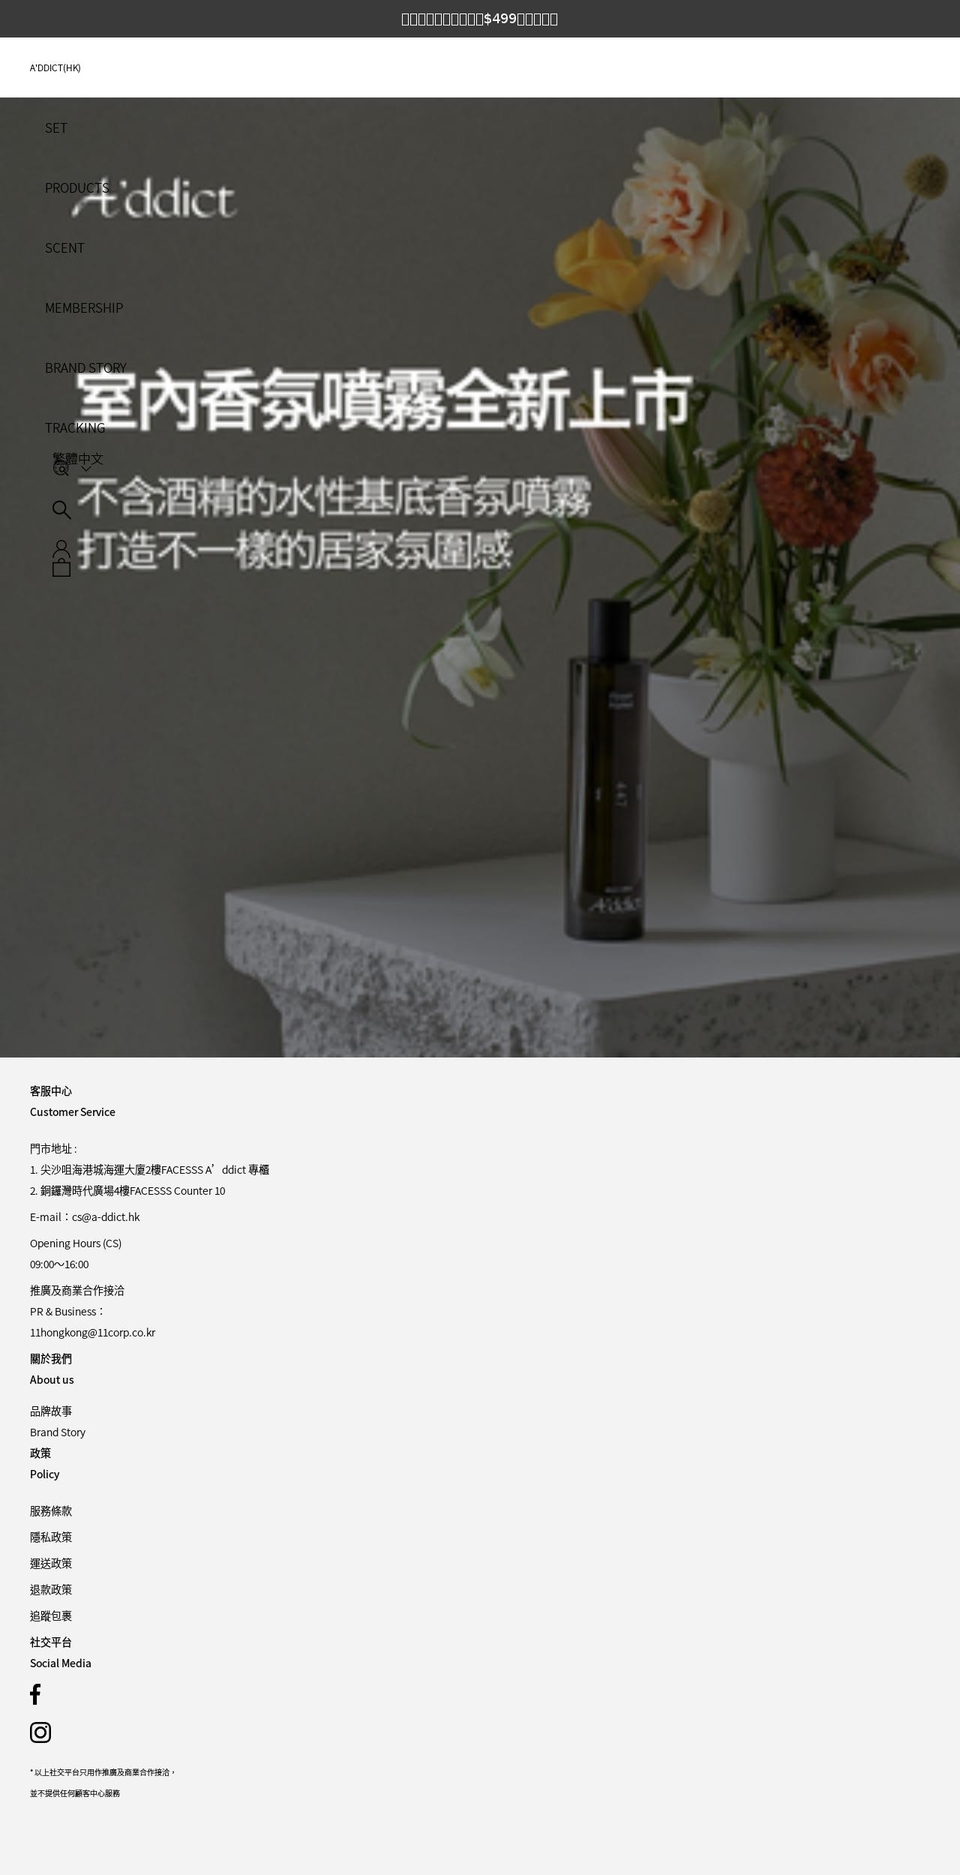 a-ddict.hk shopify website screenshot